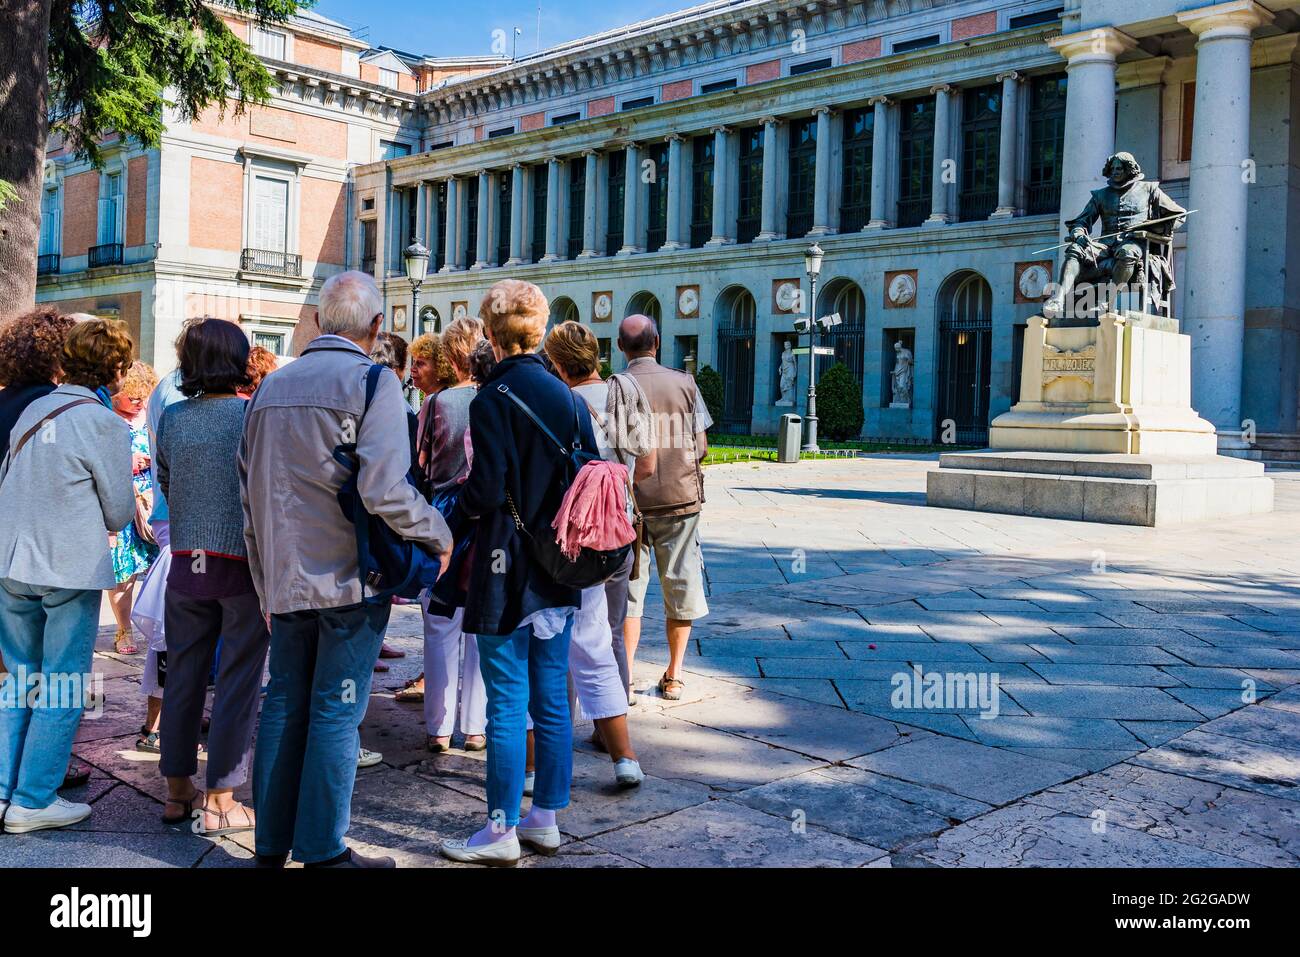 Group of tourists. The Prado Museum - Museo del Prado, officially known as Museo Nacional del Prado, is the main Spanish national art museum, located Stock Photo